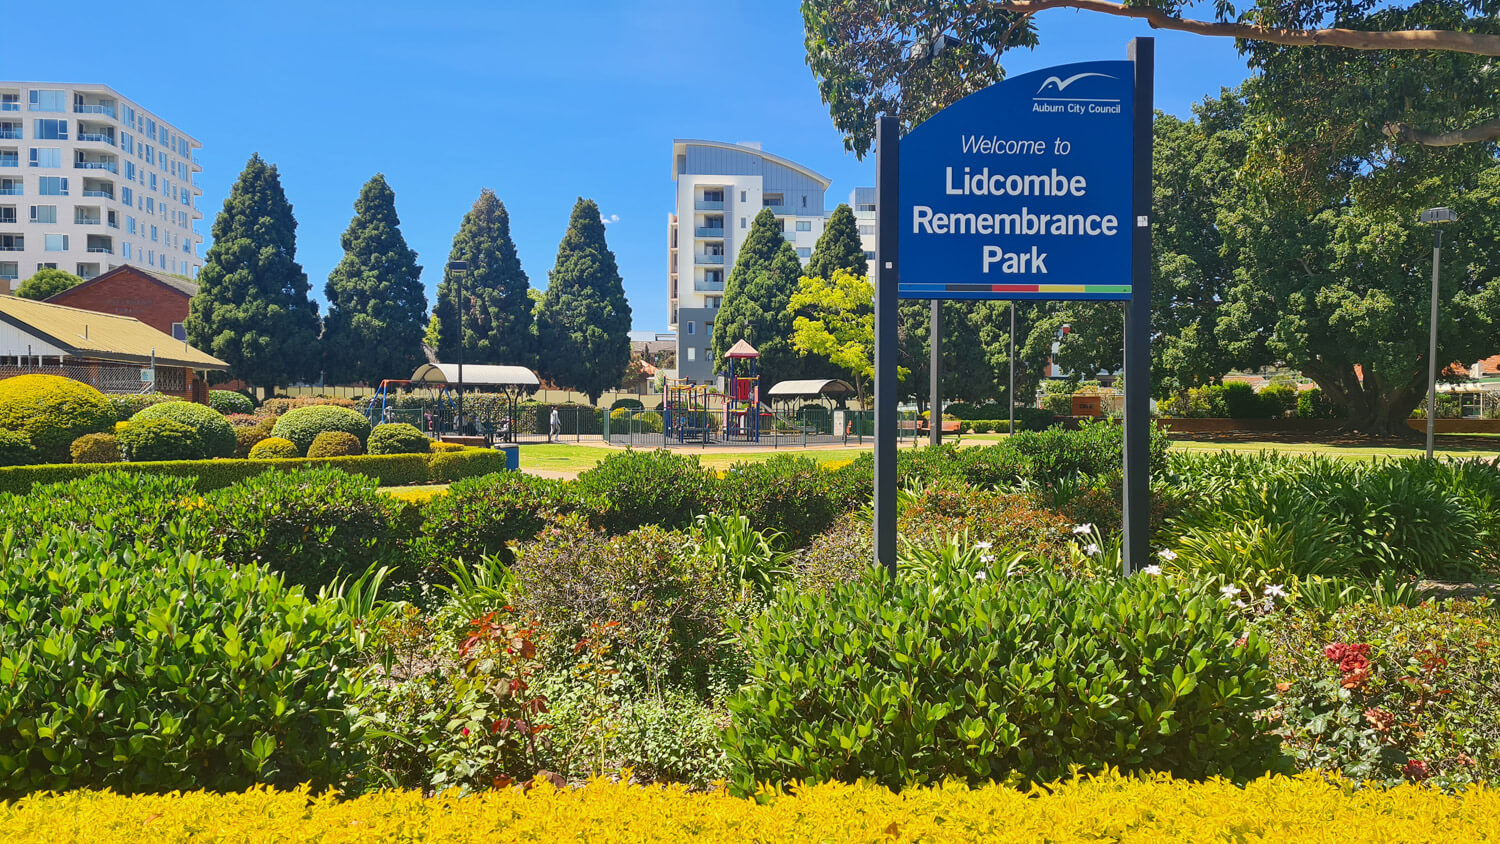 Lidcombe remembrance park